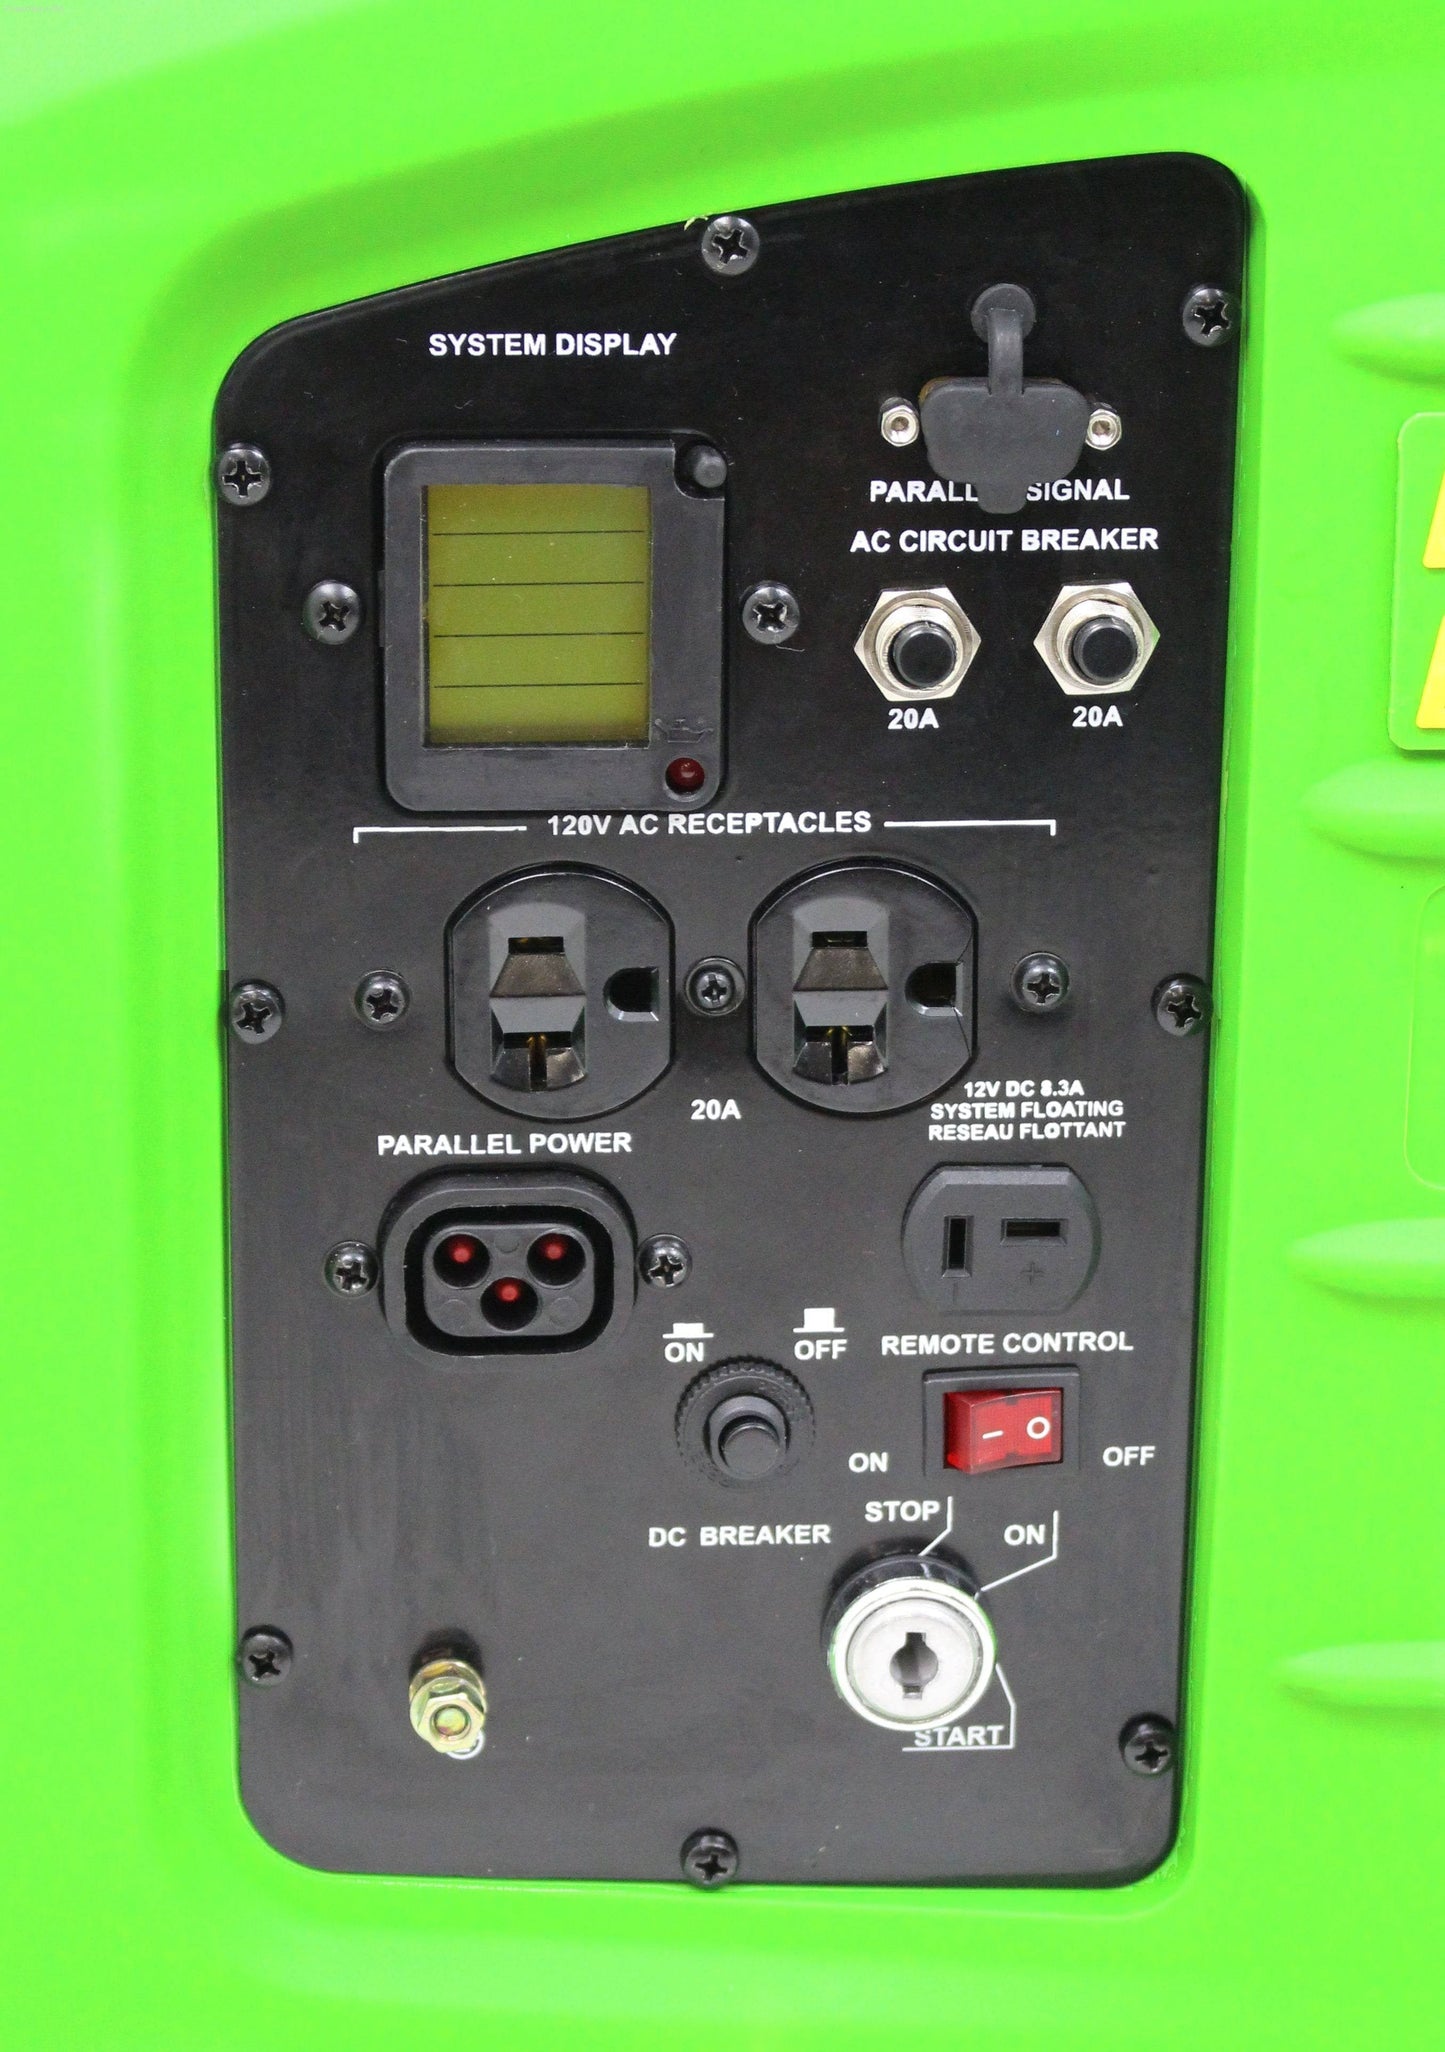 Gas Generators - LIFAN POWER USA Electronic Fuel Injected 3100 Watt Digital Inverter Generator